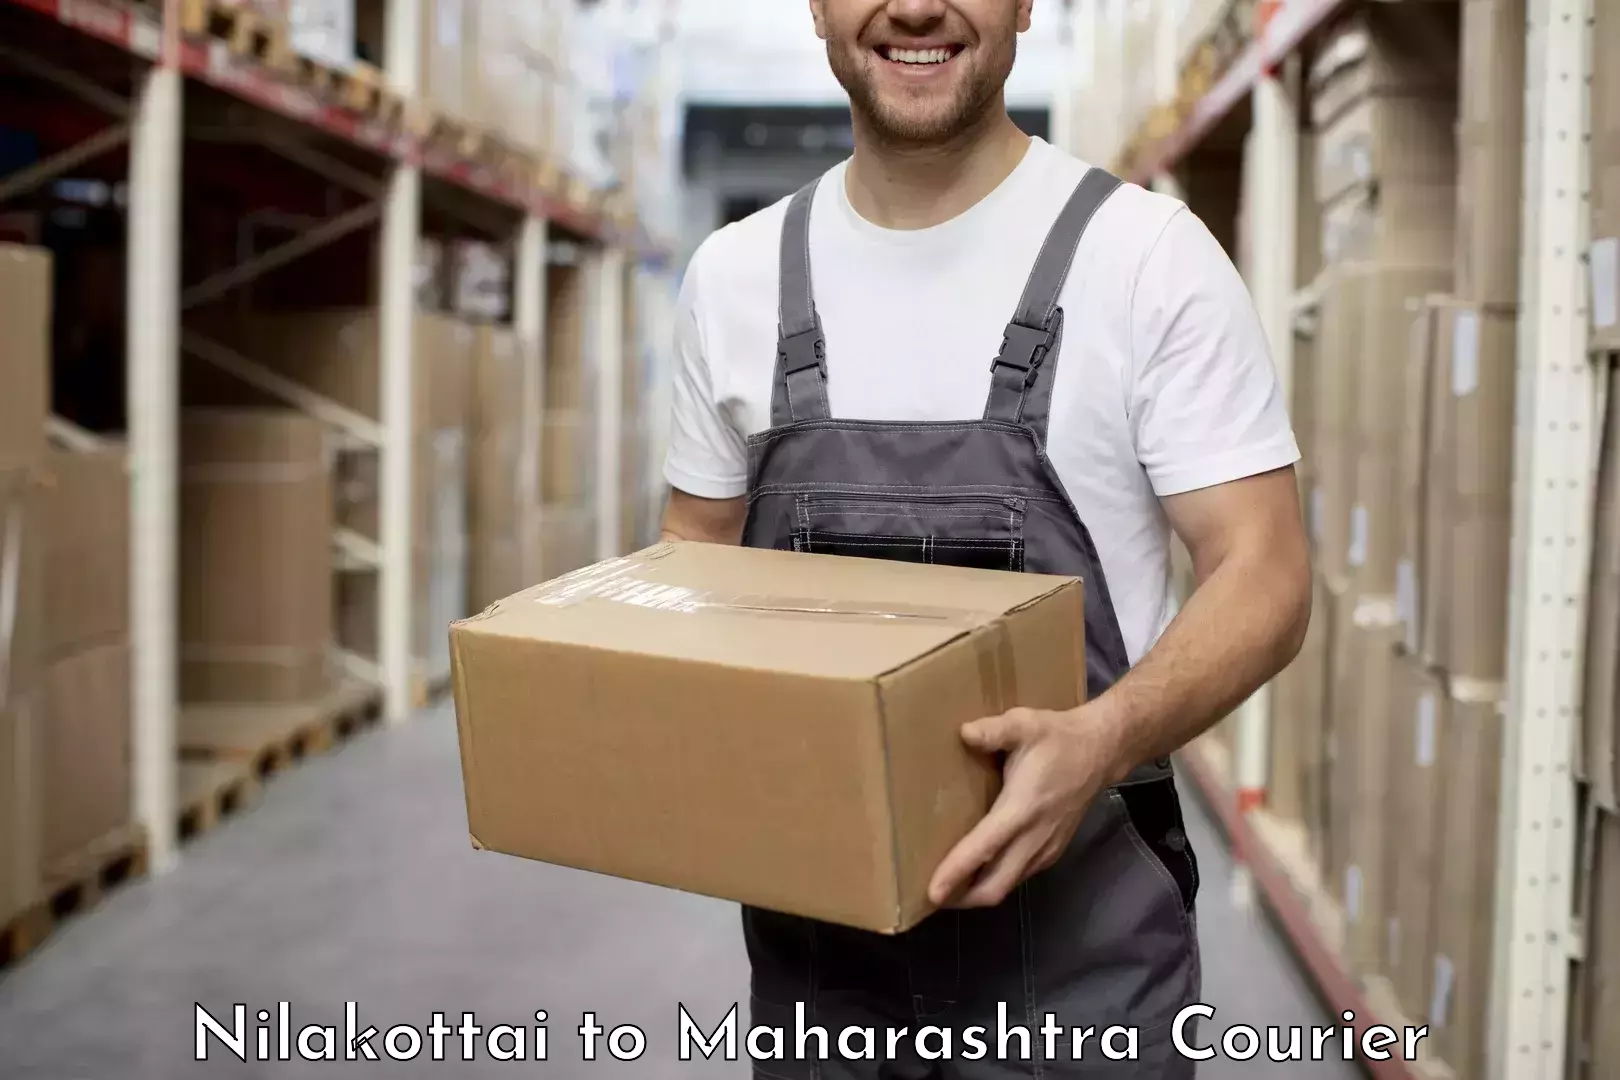 Customer-centric shipping Nilakottai to Pune